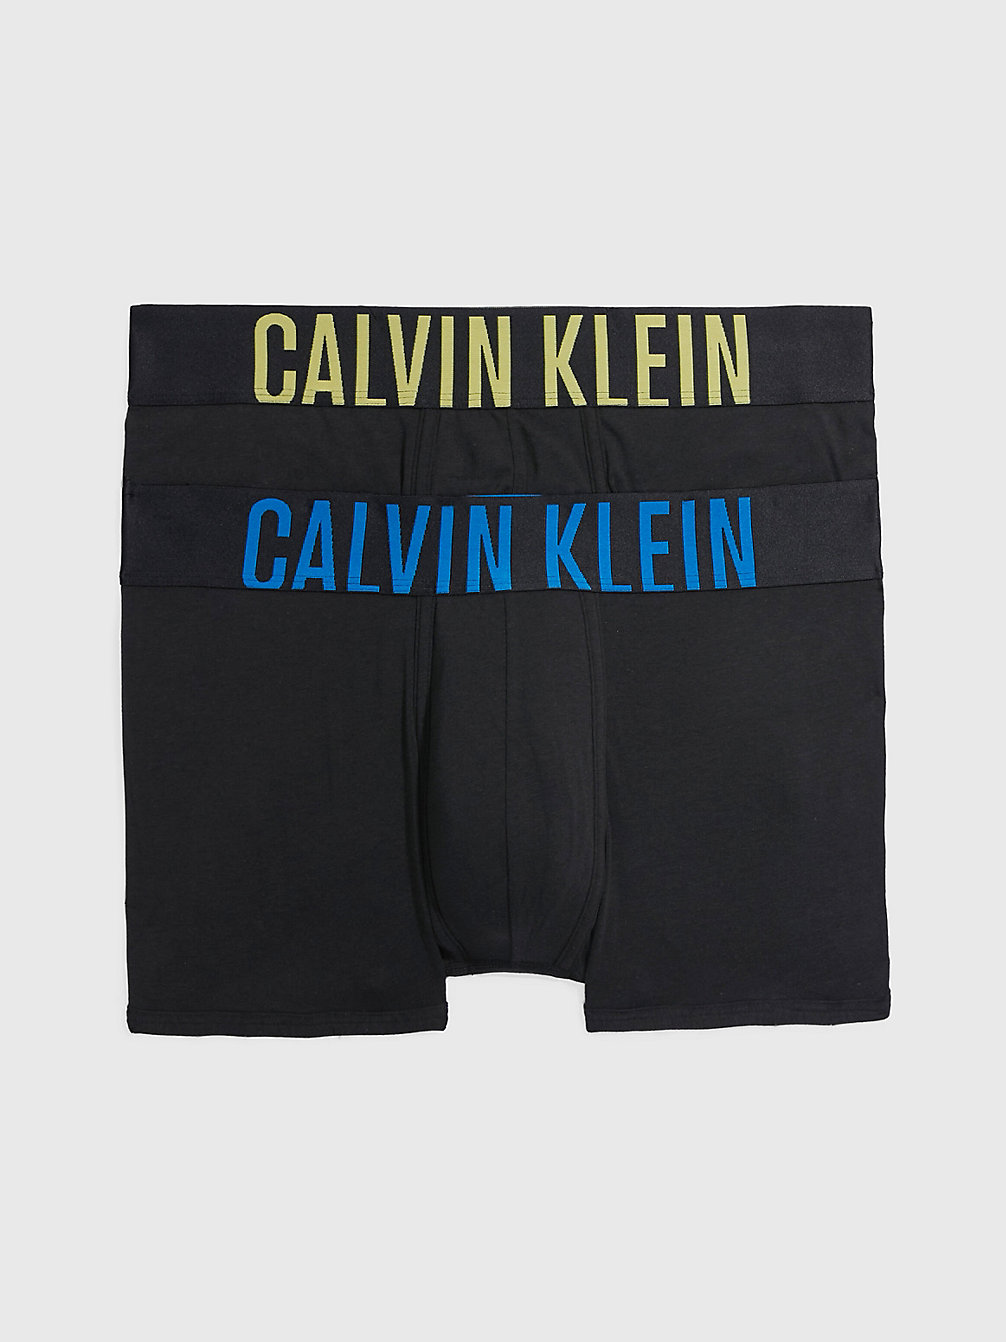 B-CELERY SPRIG, PIECE OF BLUE LOGO Lot De 2 Boxers - Intense Power undefined hommes Calvin Klein